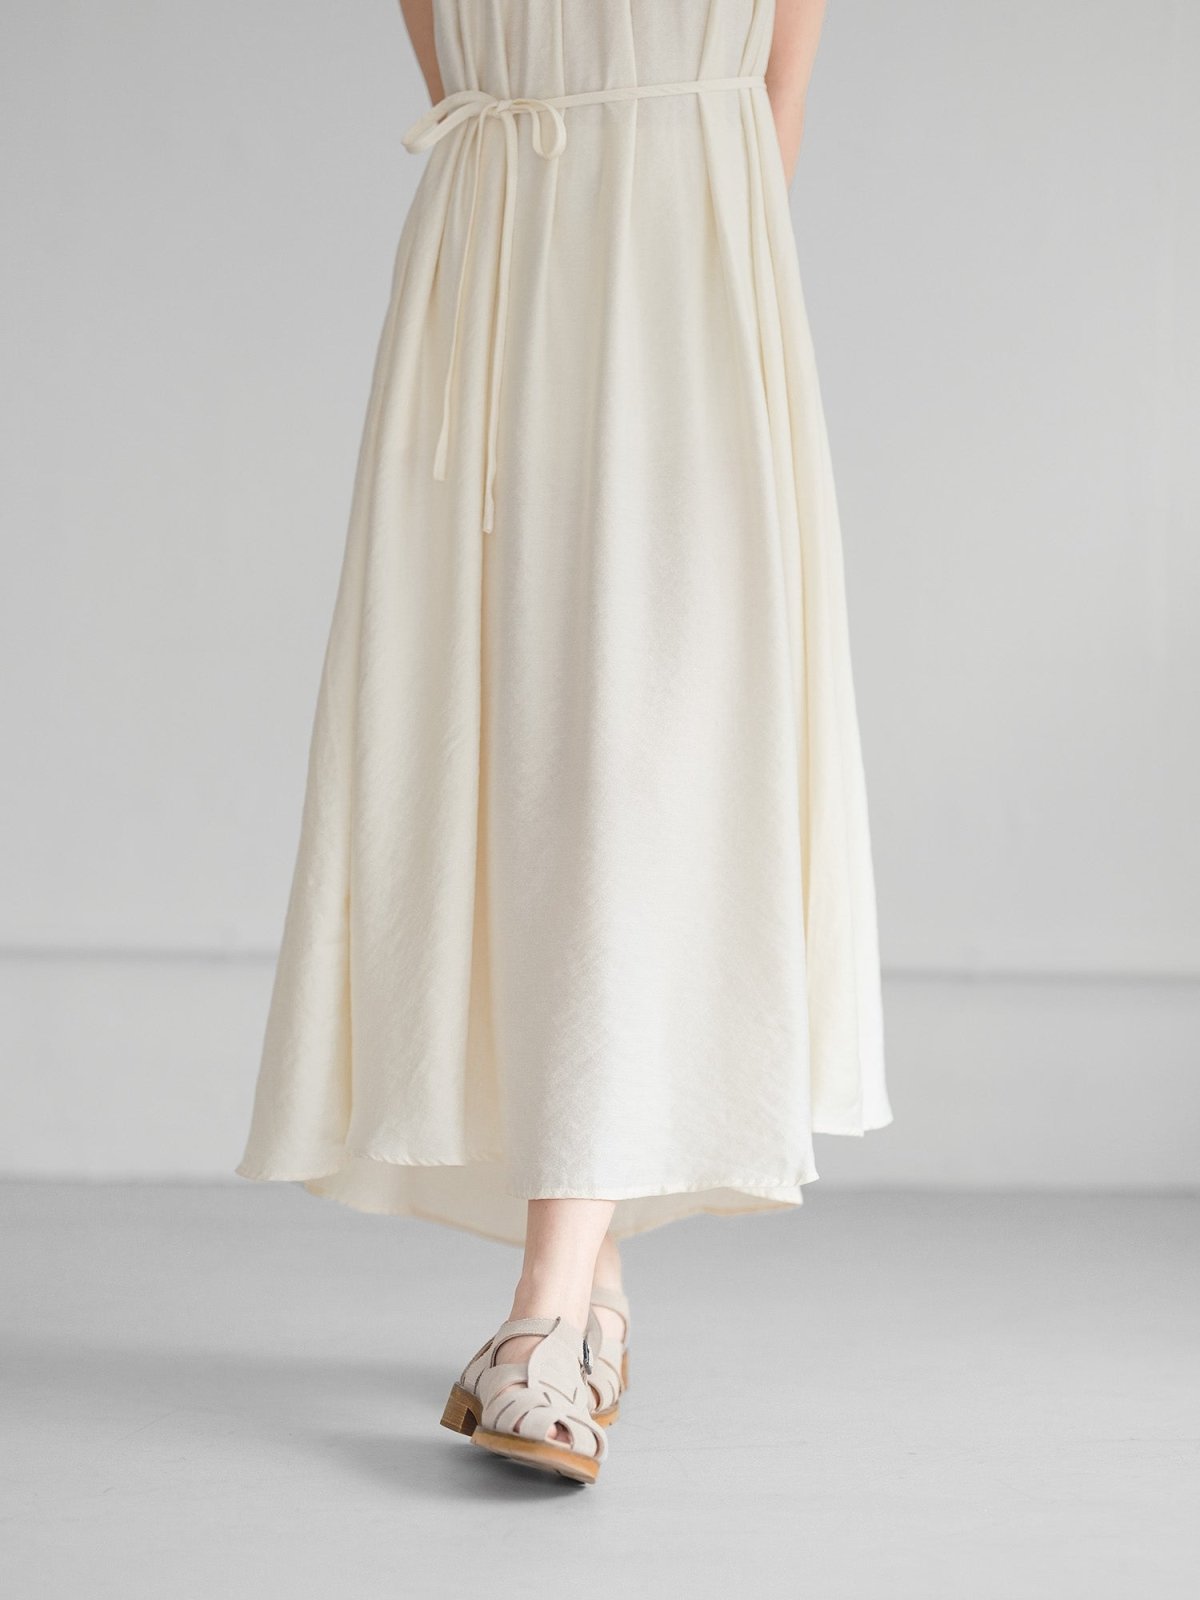 Levine Camisole Flare Dress - DAG-G-220130IvoryF - Mochi Ivory - F - D'ZAGE Designs